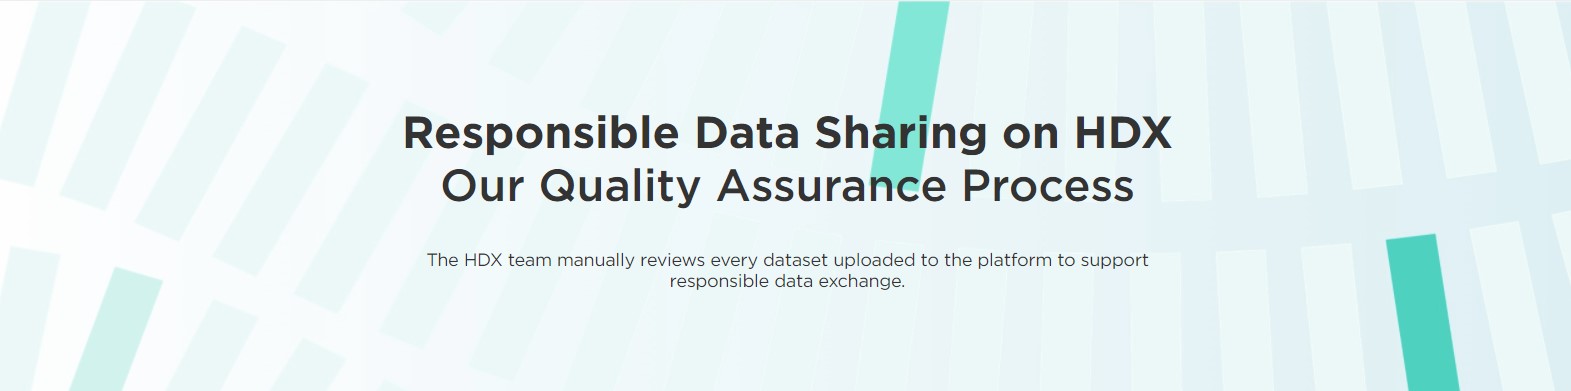 Responsible Data Sharing on HDX banner